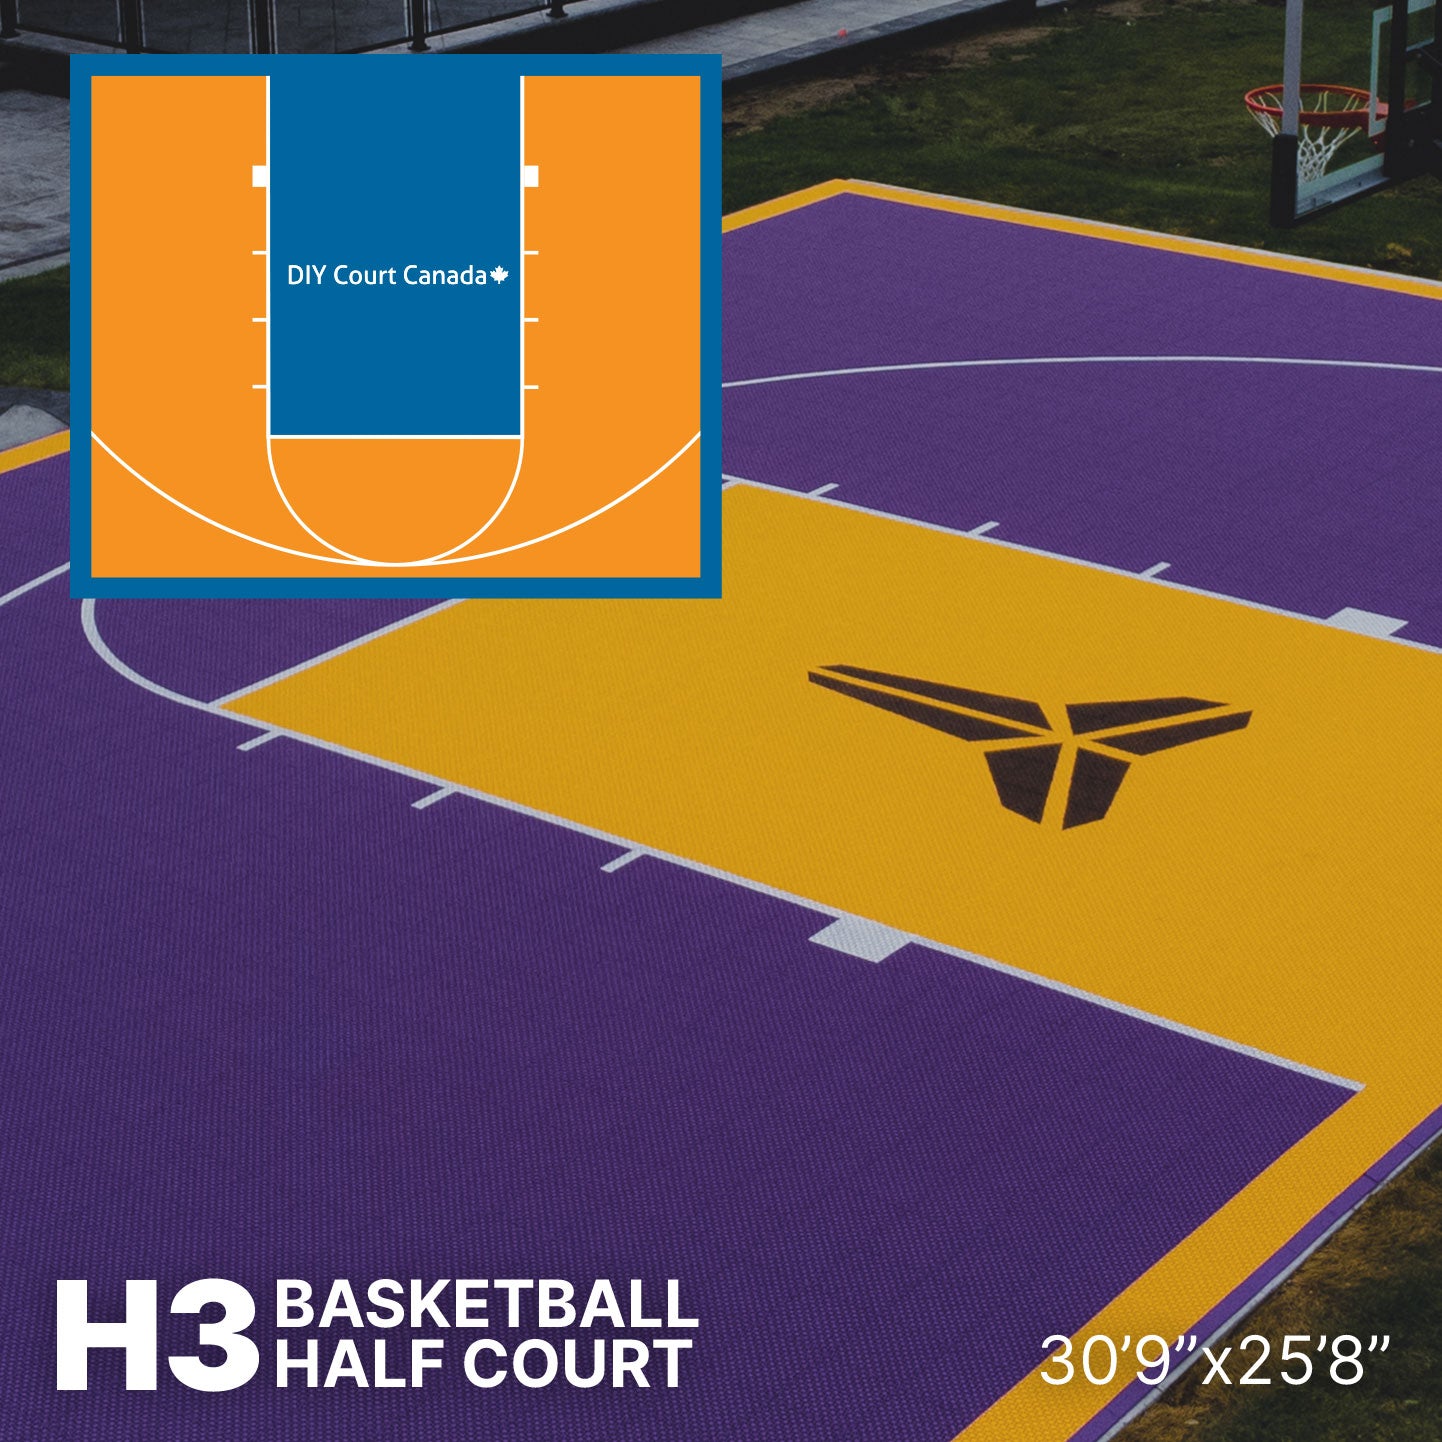 Basketball Court Kit - Half Court 30'9" x 25'8" (H3) - DIY Court Canada